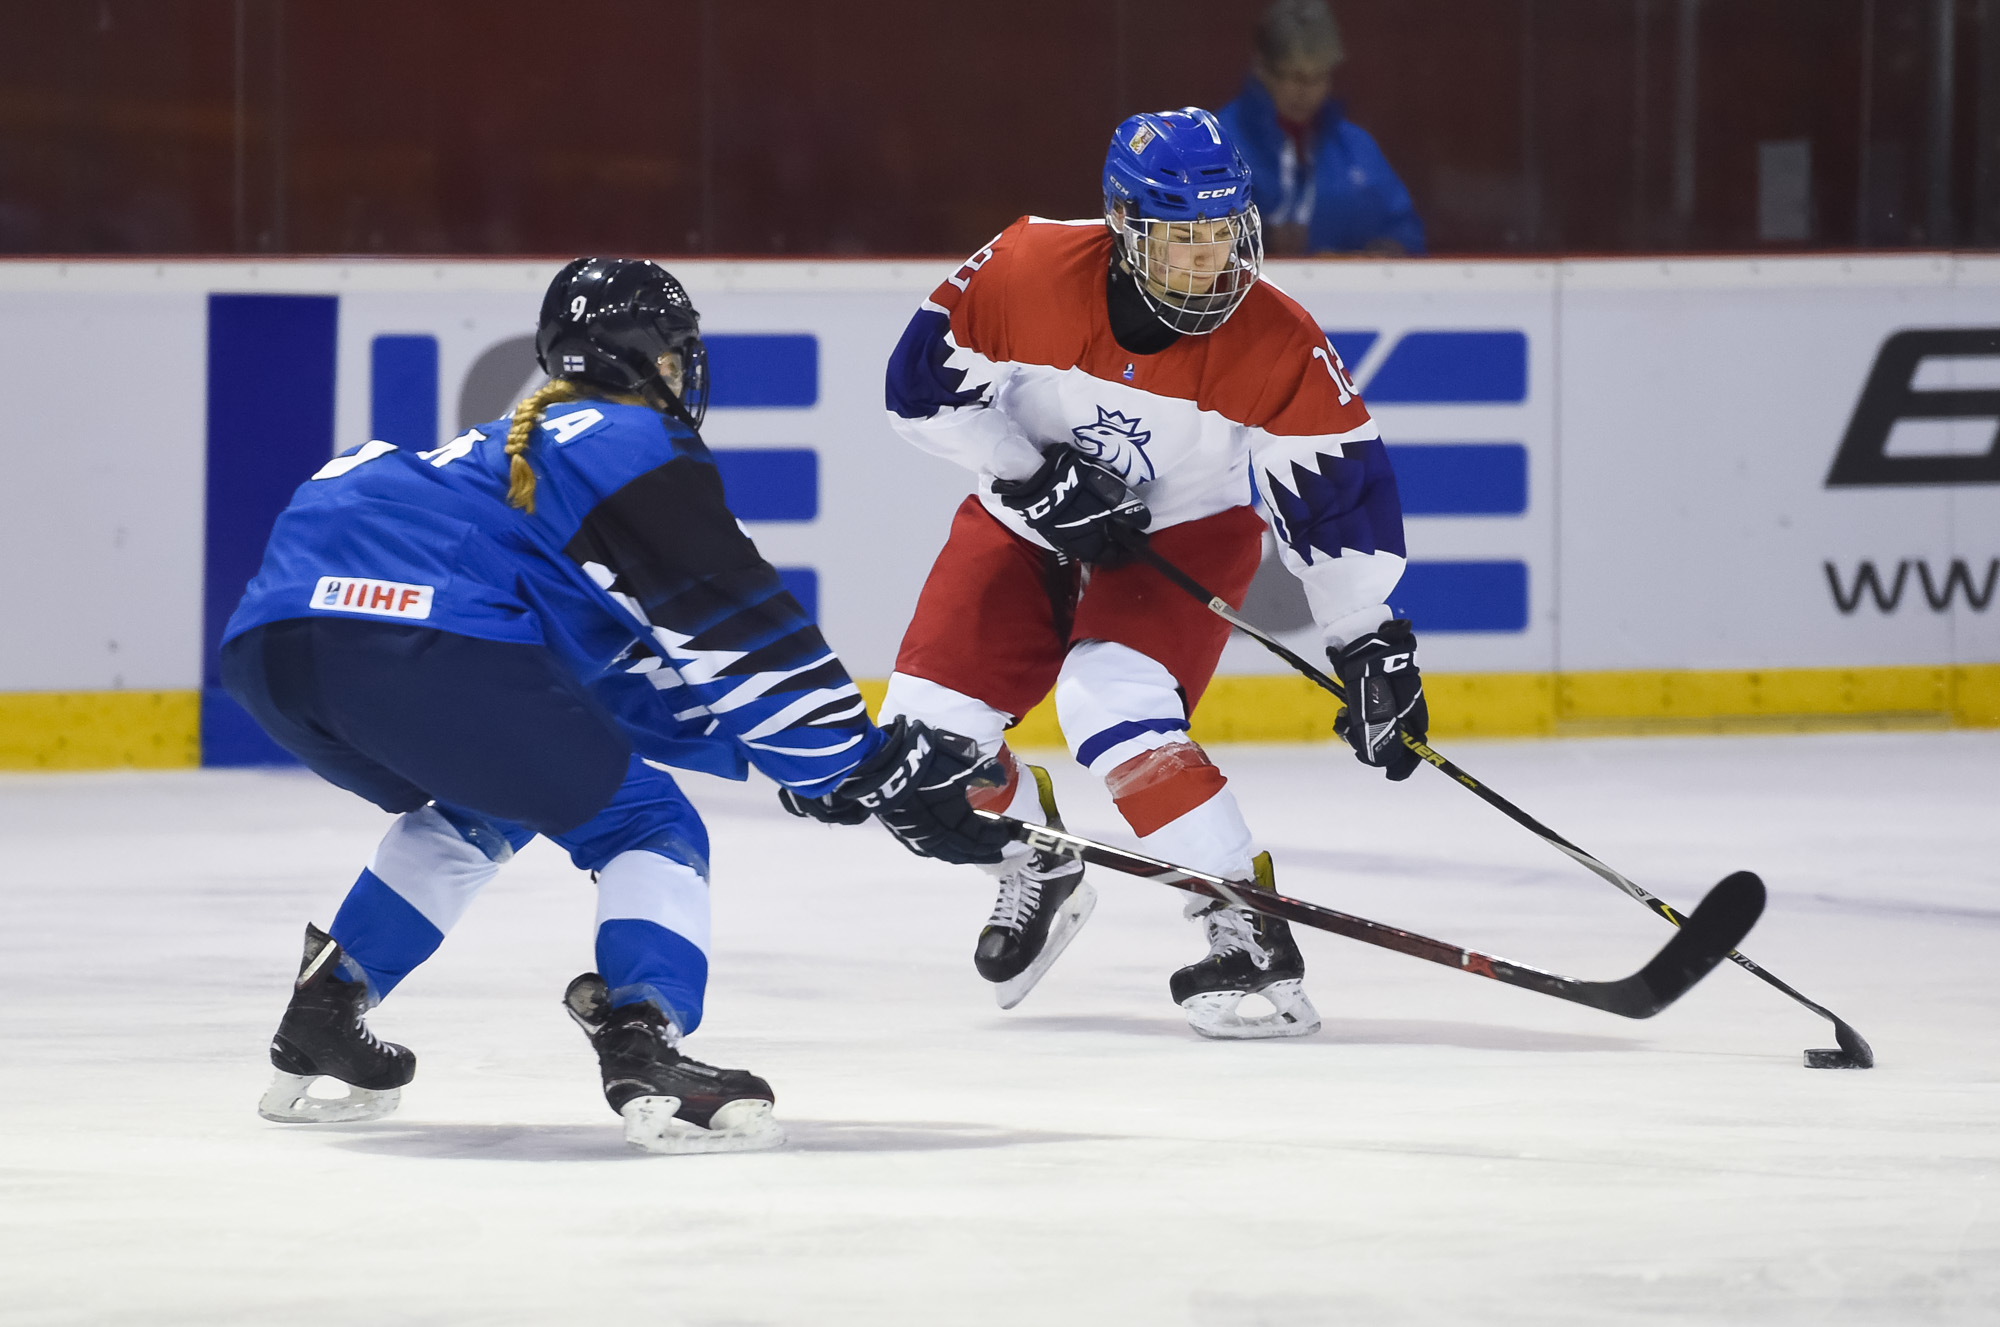 IIHF Finland advances to semifinals